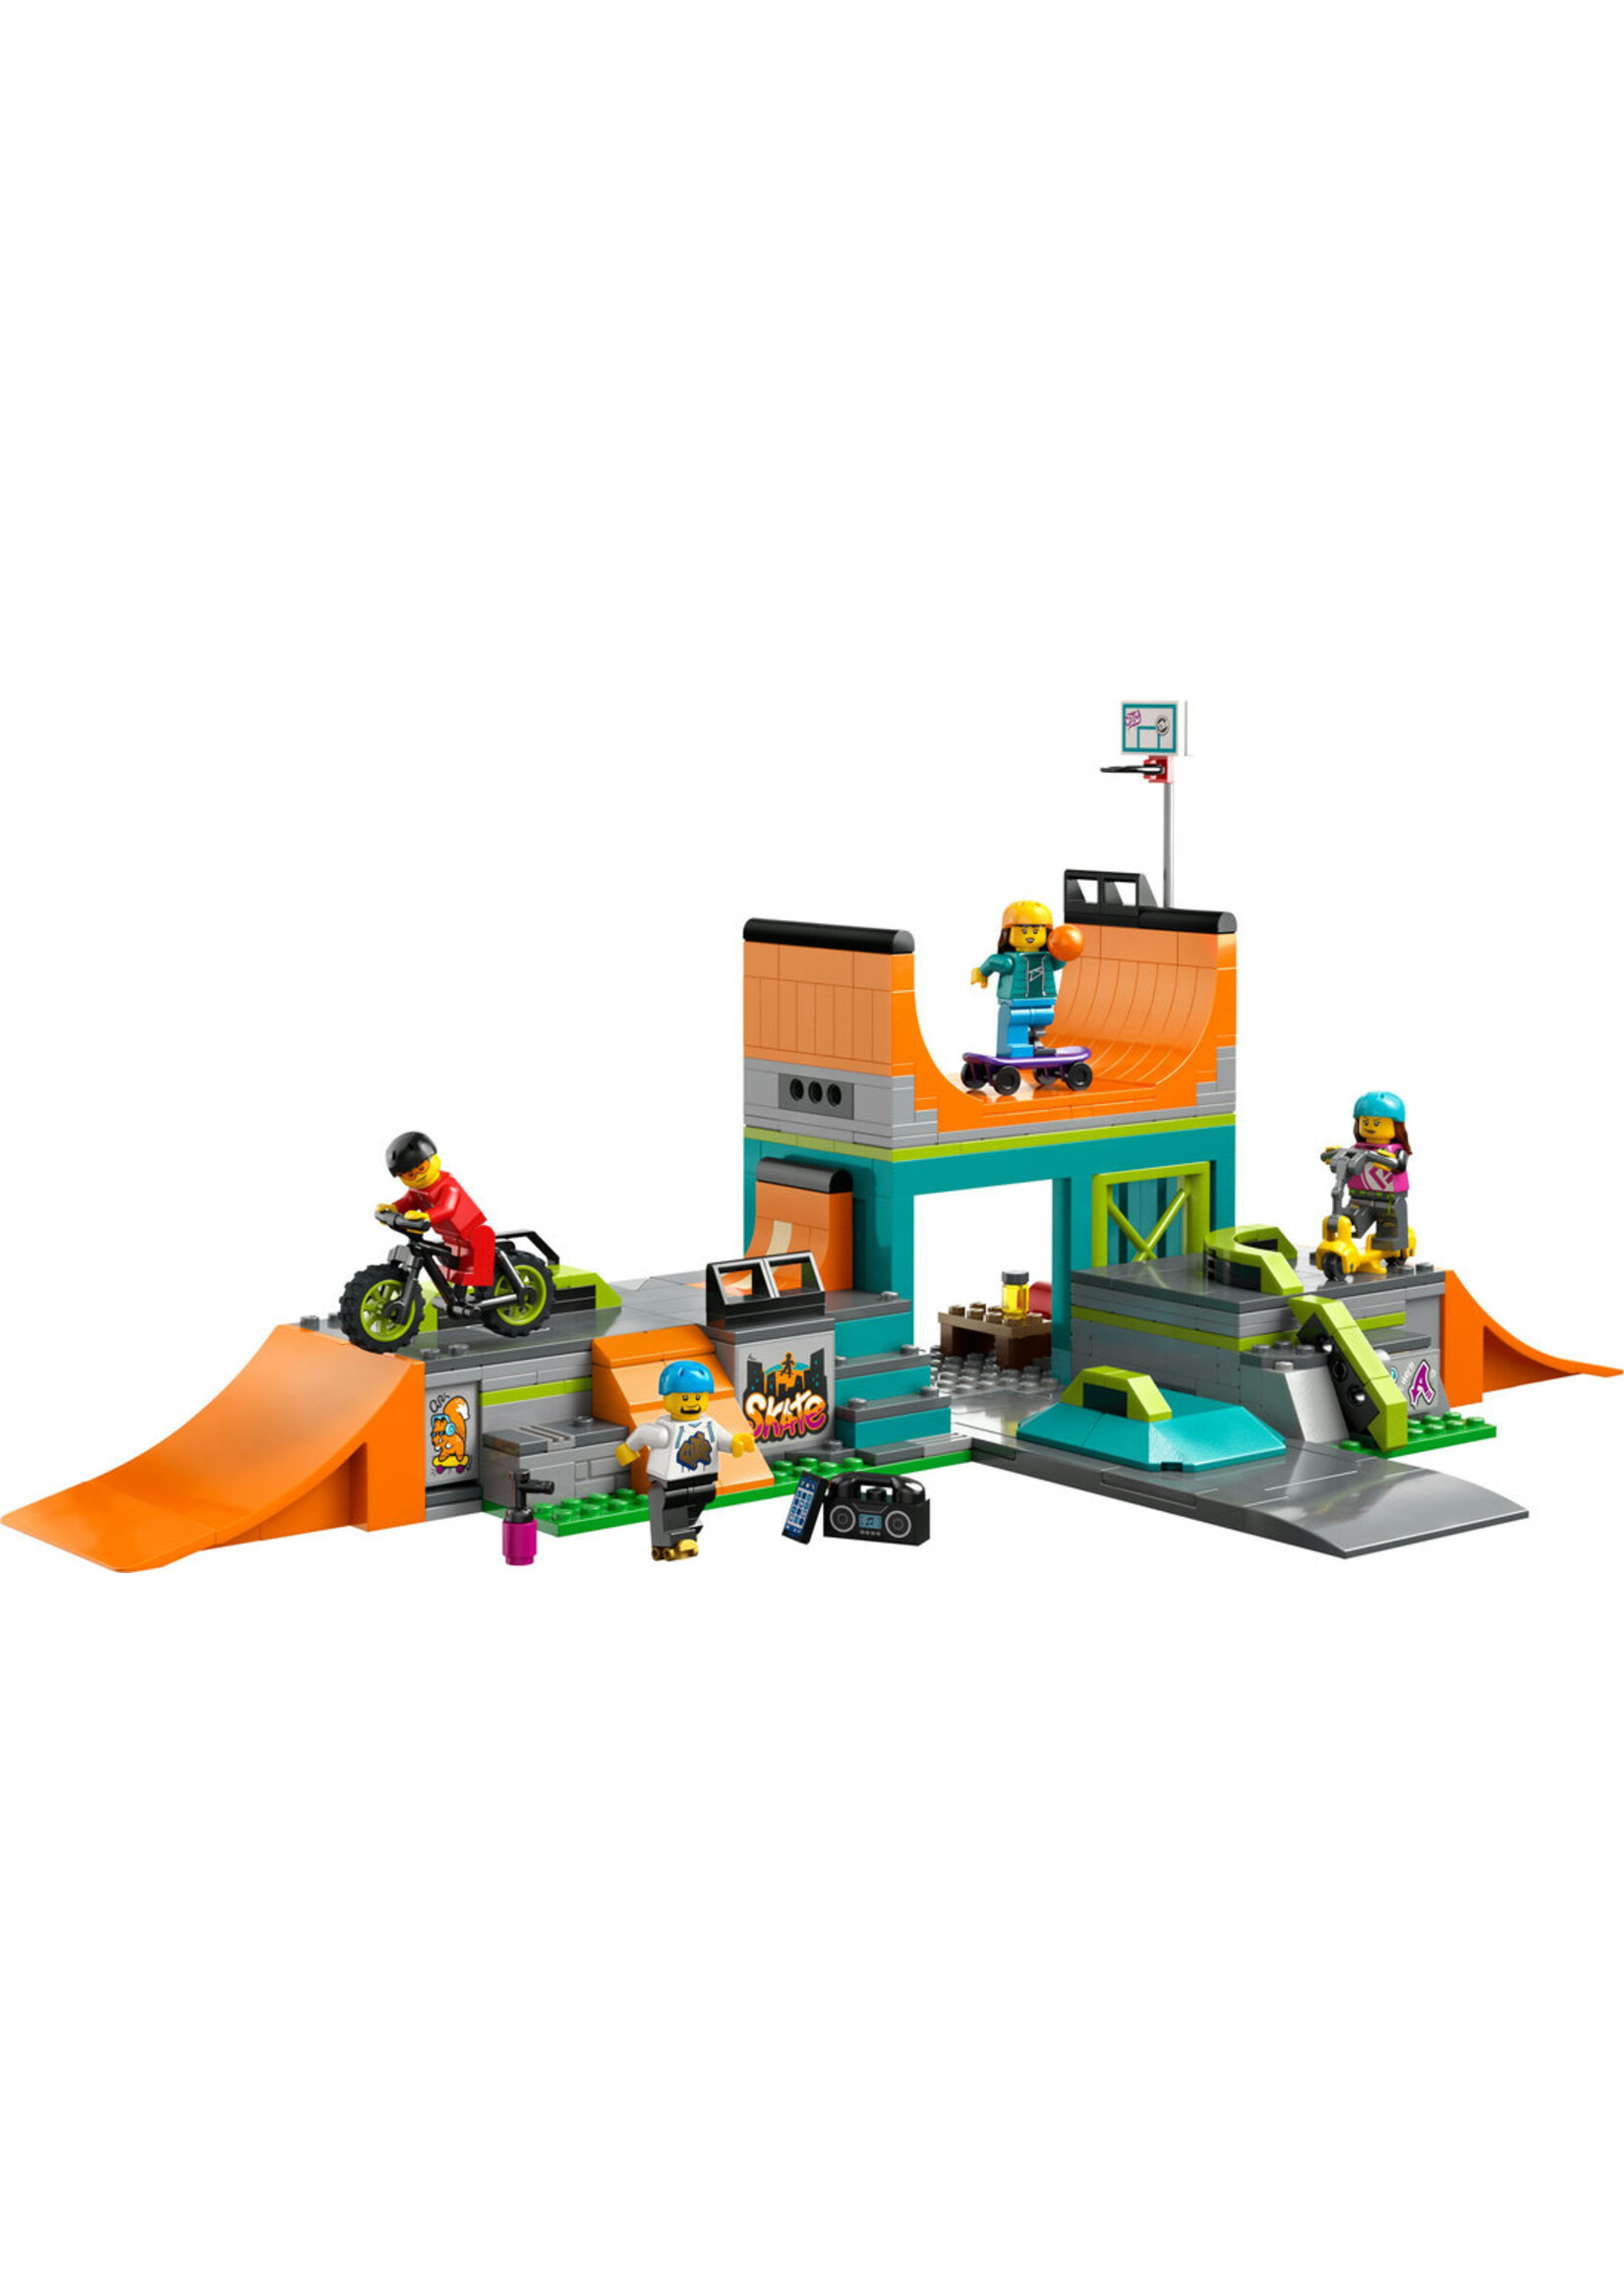 LEGO 60364 - Street Skate Park